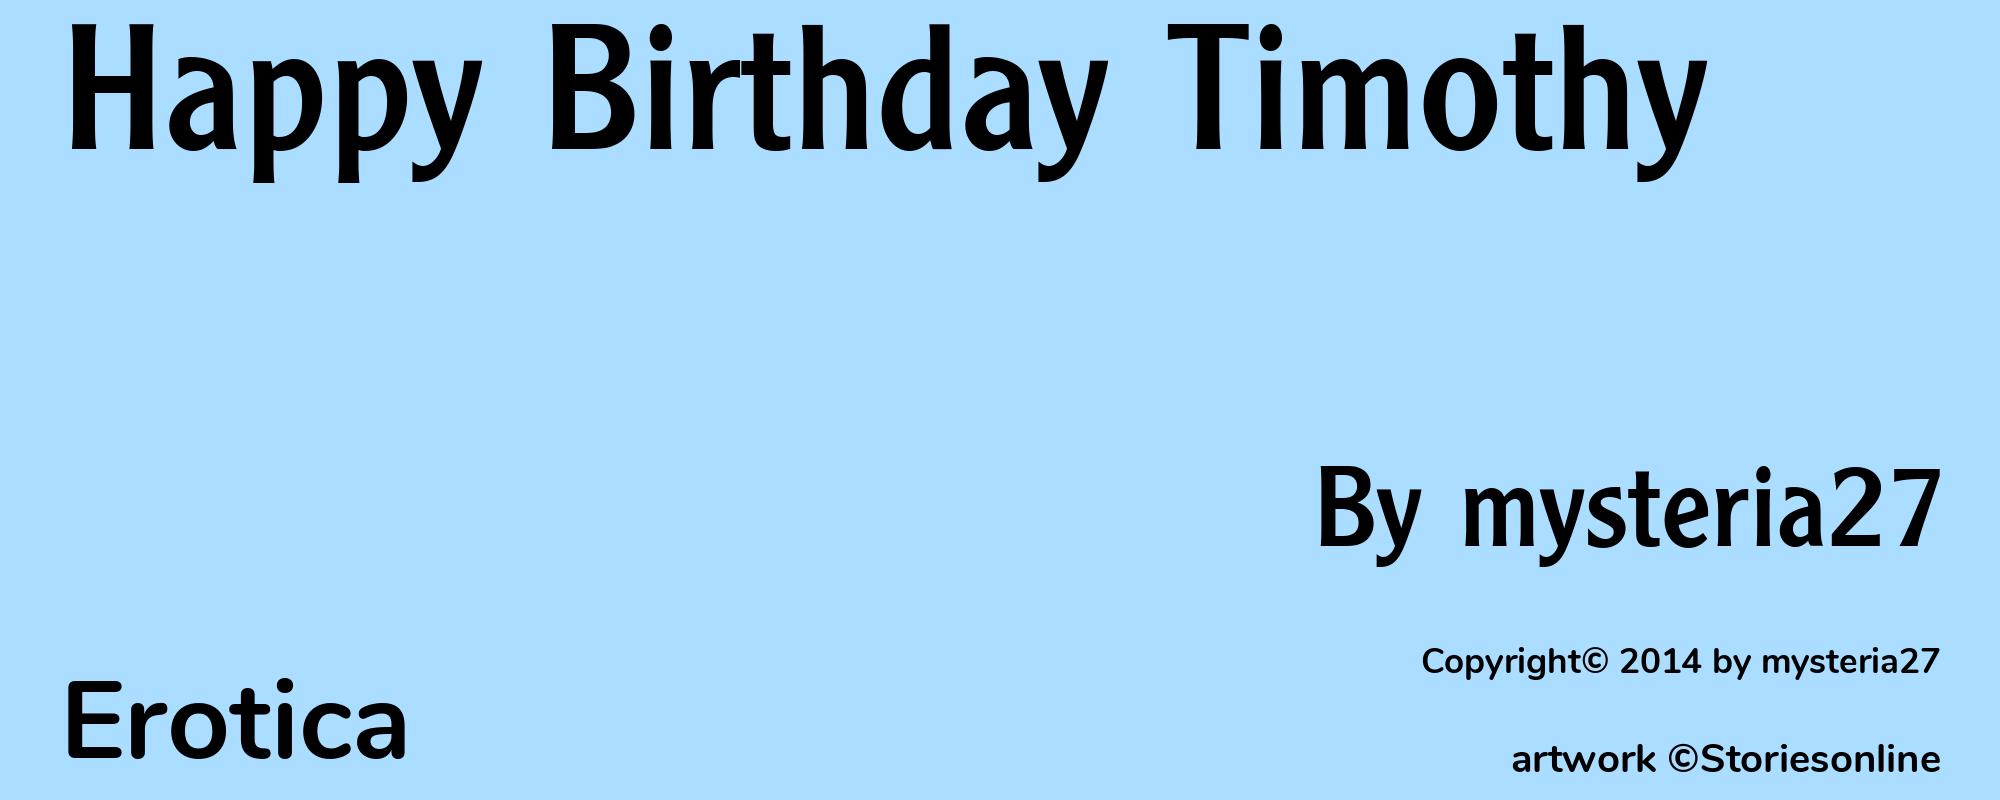 Happy Birthday Timothy - Cover